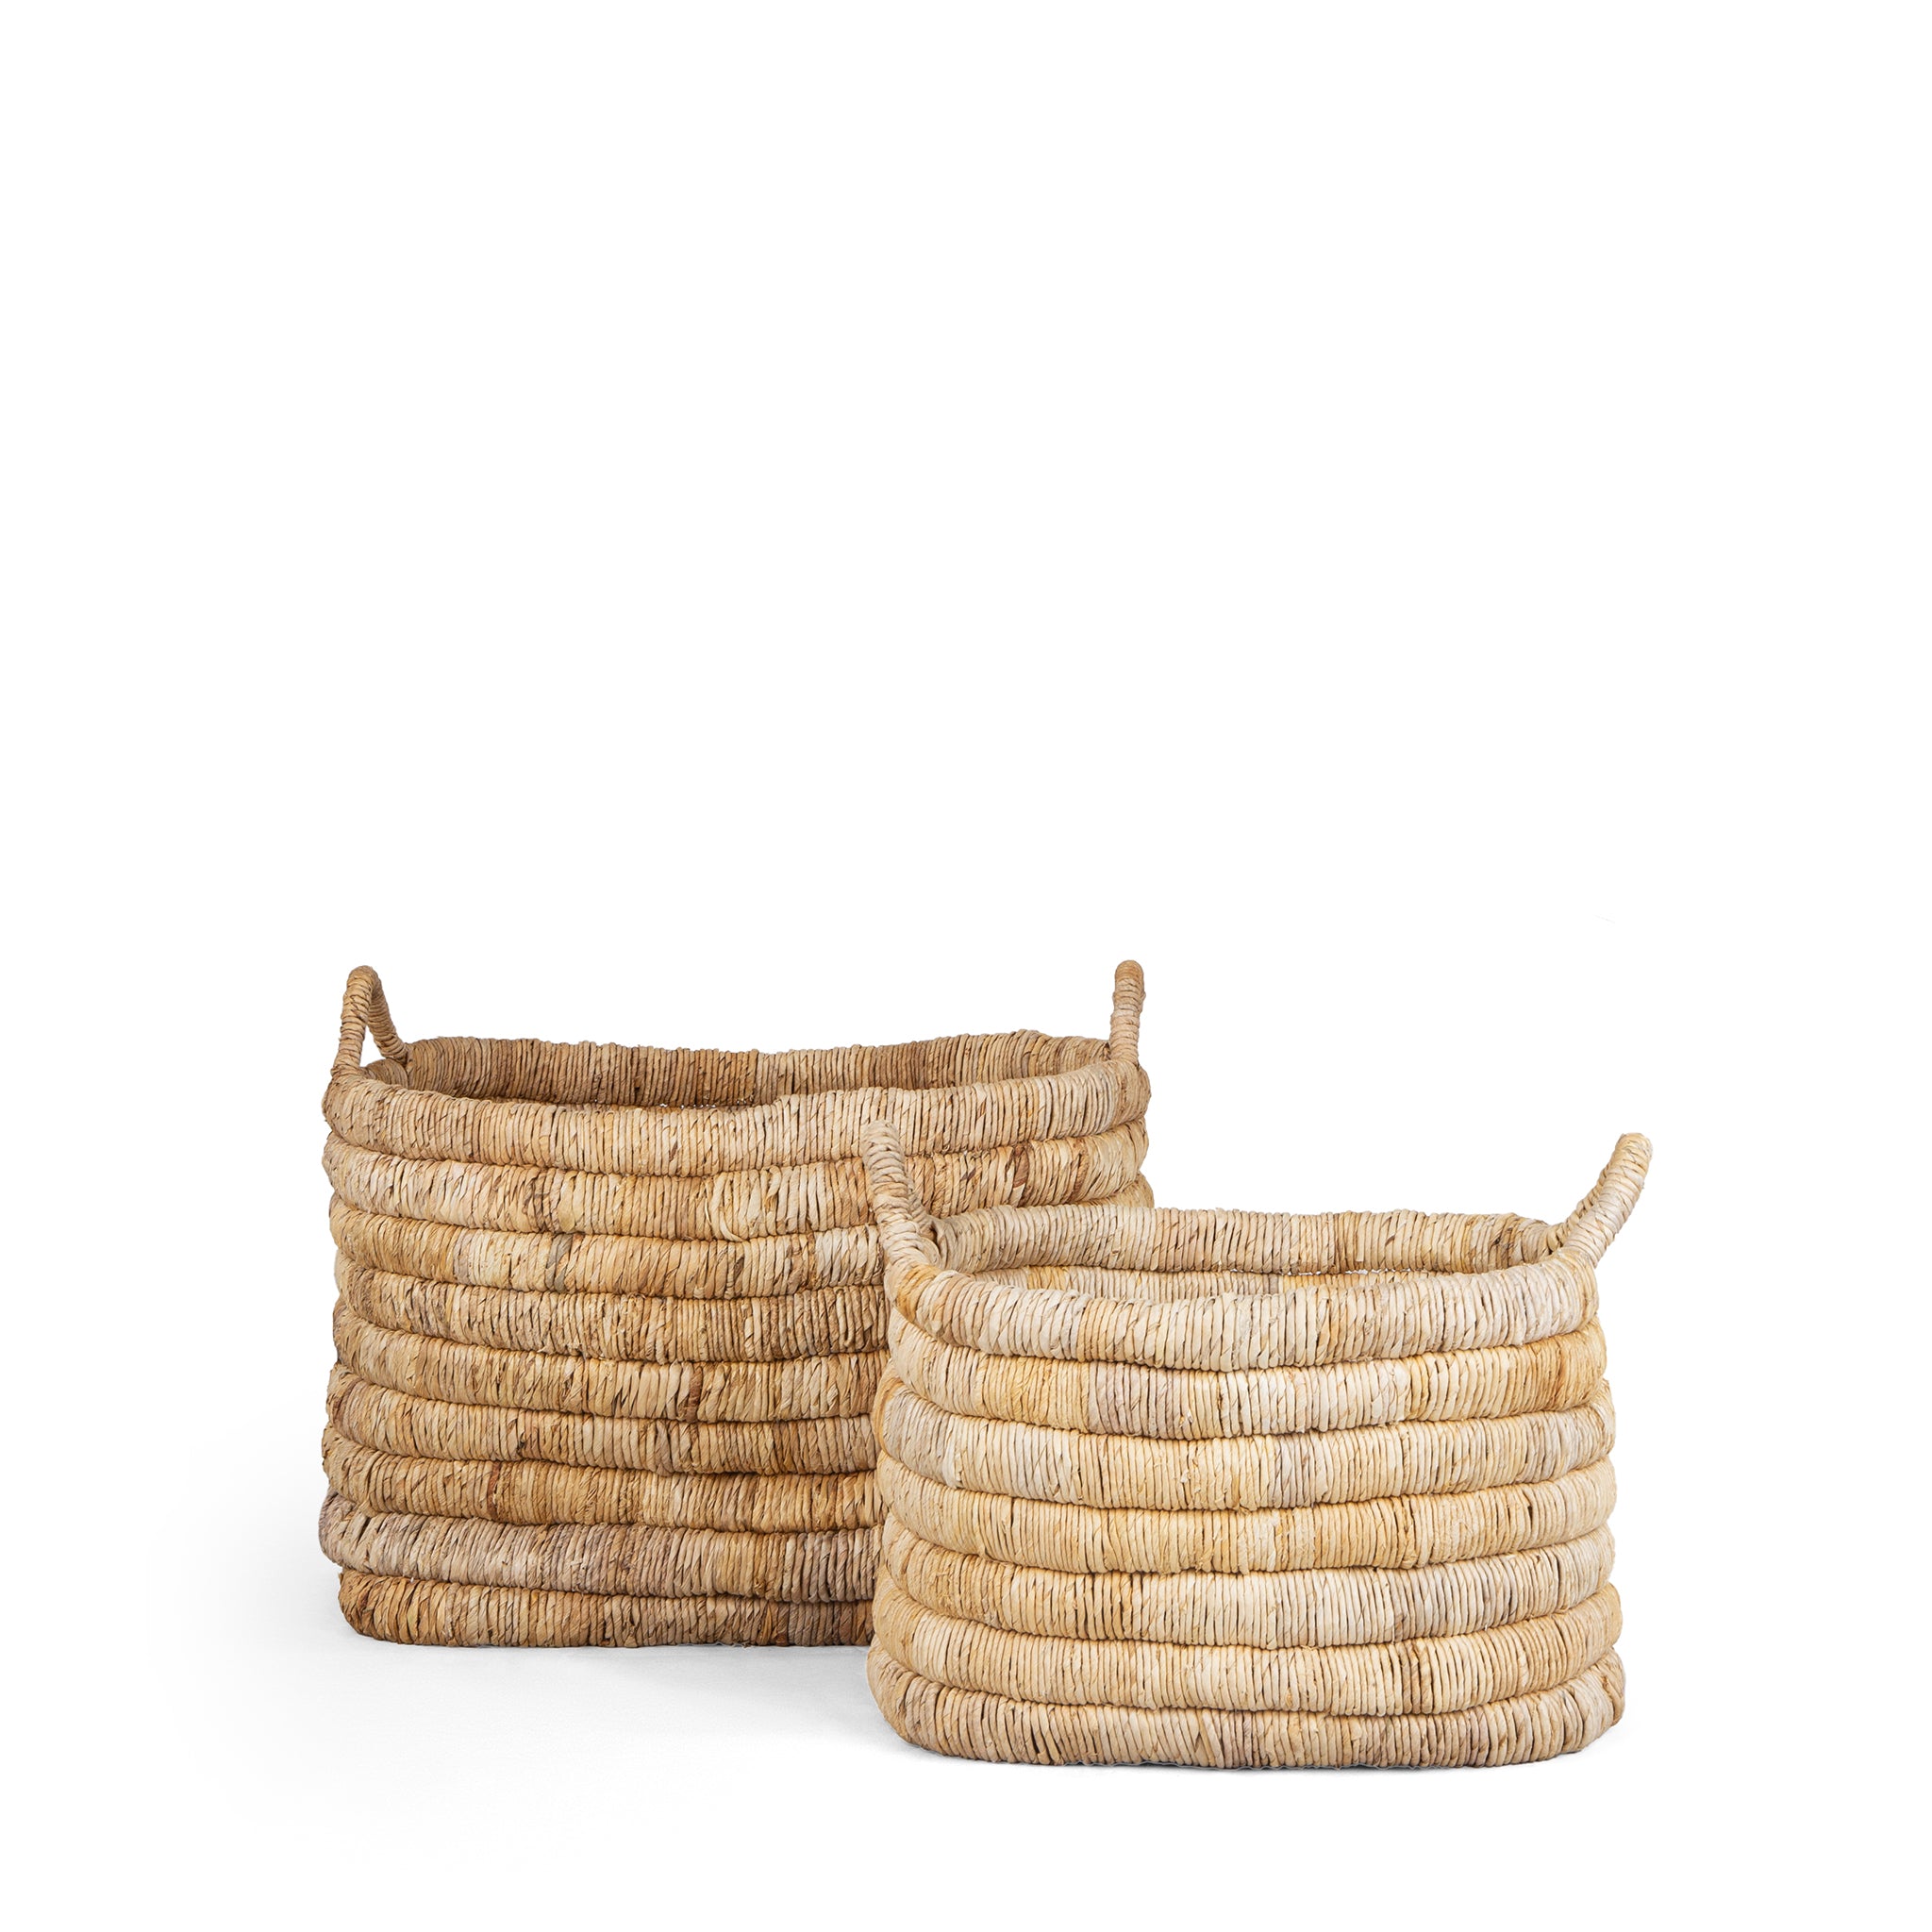 dbodhi caterpillar sago rectangular basket - set of 2 baskets 